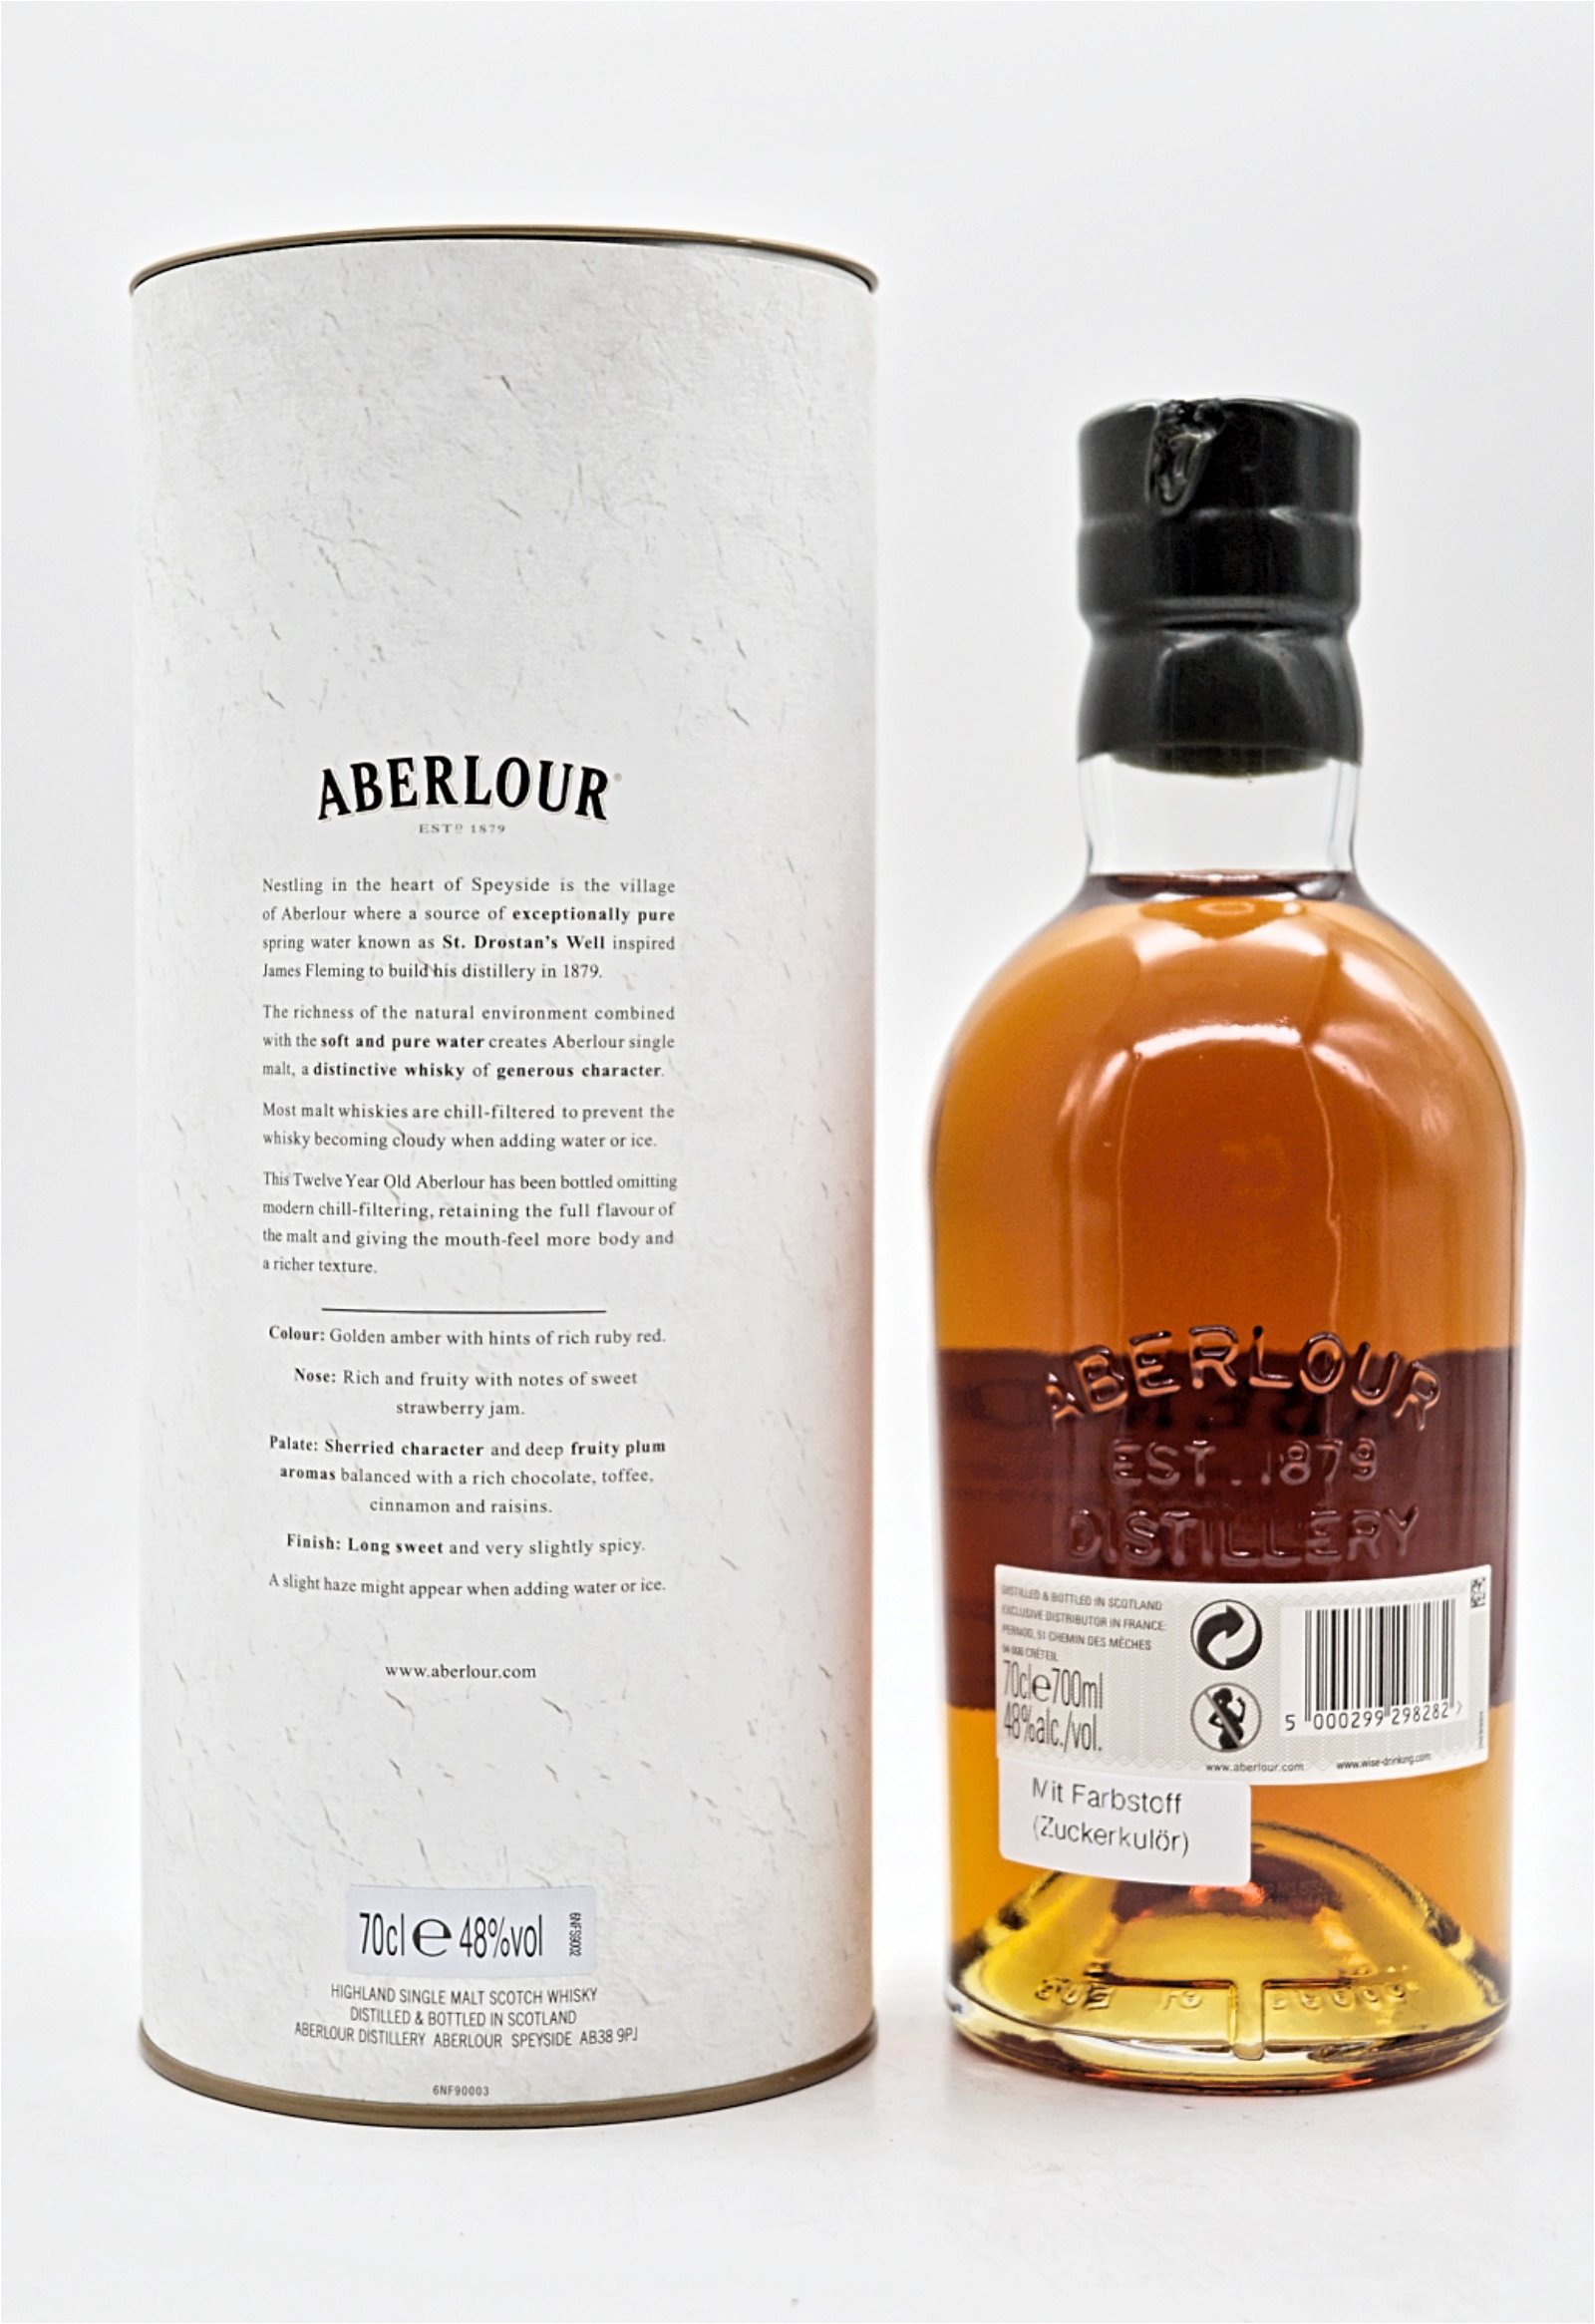 Aberlour 12 Jahre Non Chill-Filtered Highland Single Malt Scotch Whisky